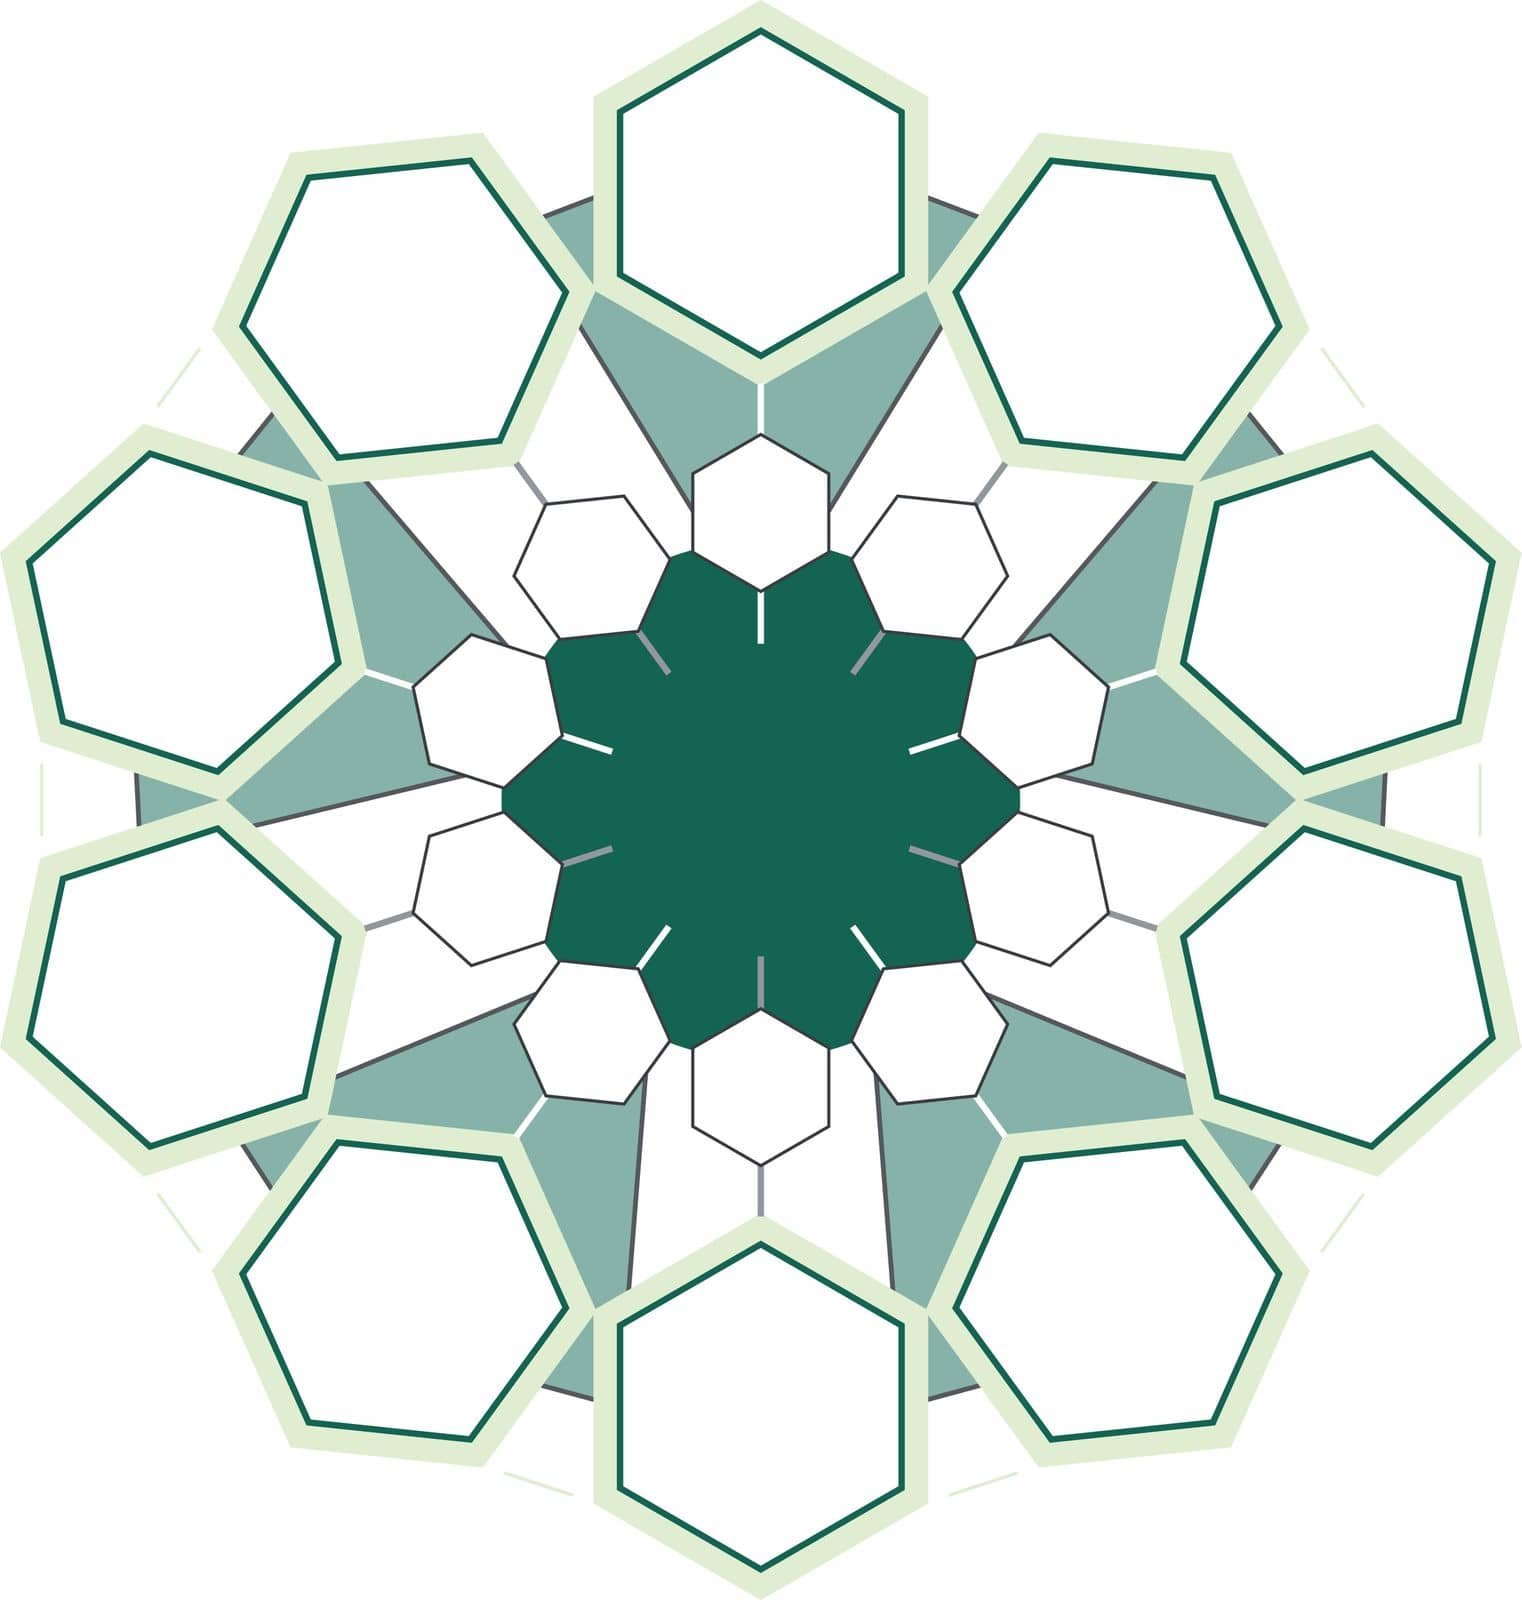 Business ecosystem organisation hexagone diagram scheme template by kisika